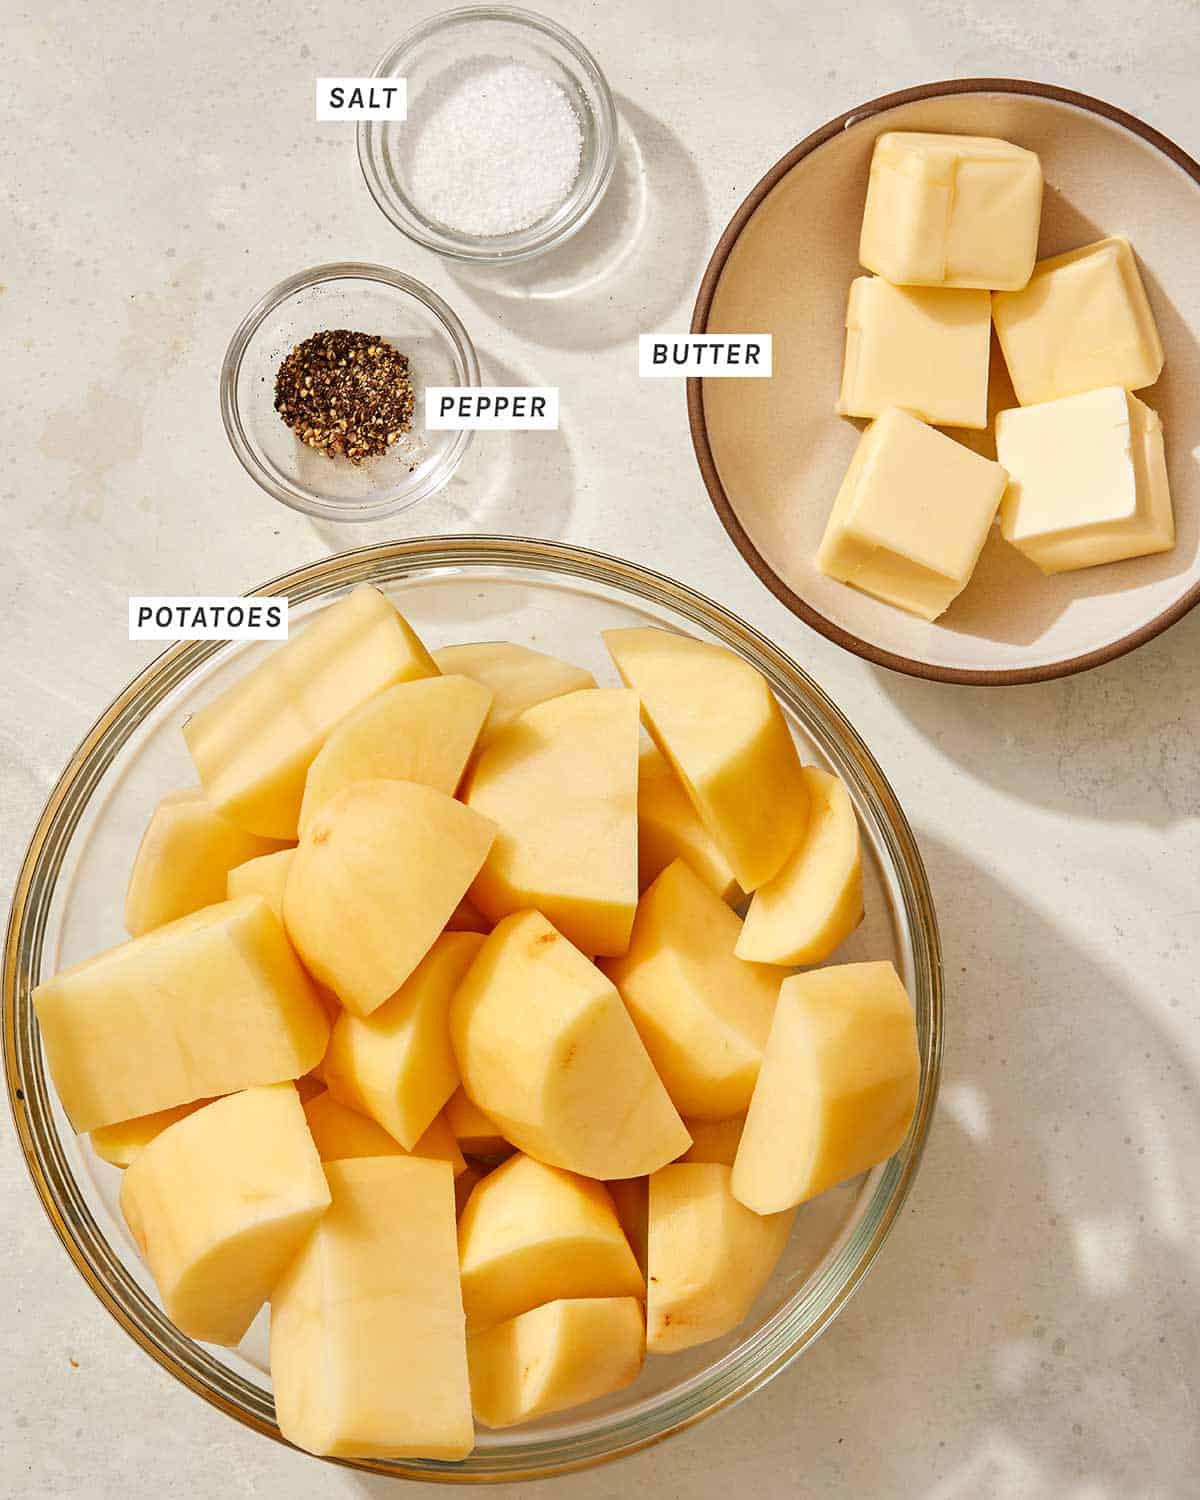 Mashed potato recipe ingredients in a kitchen. 